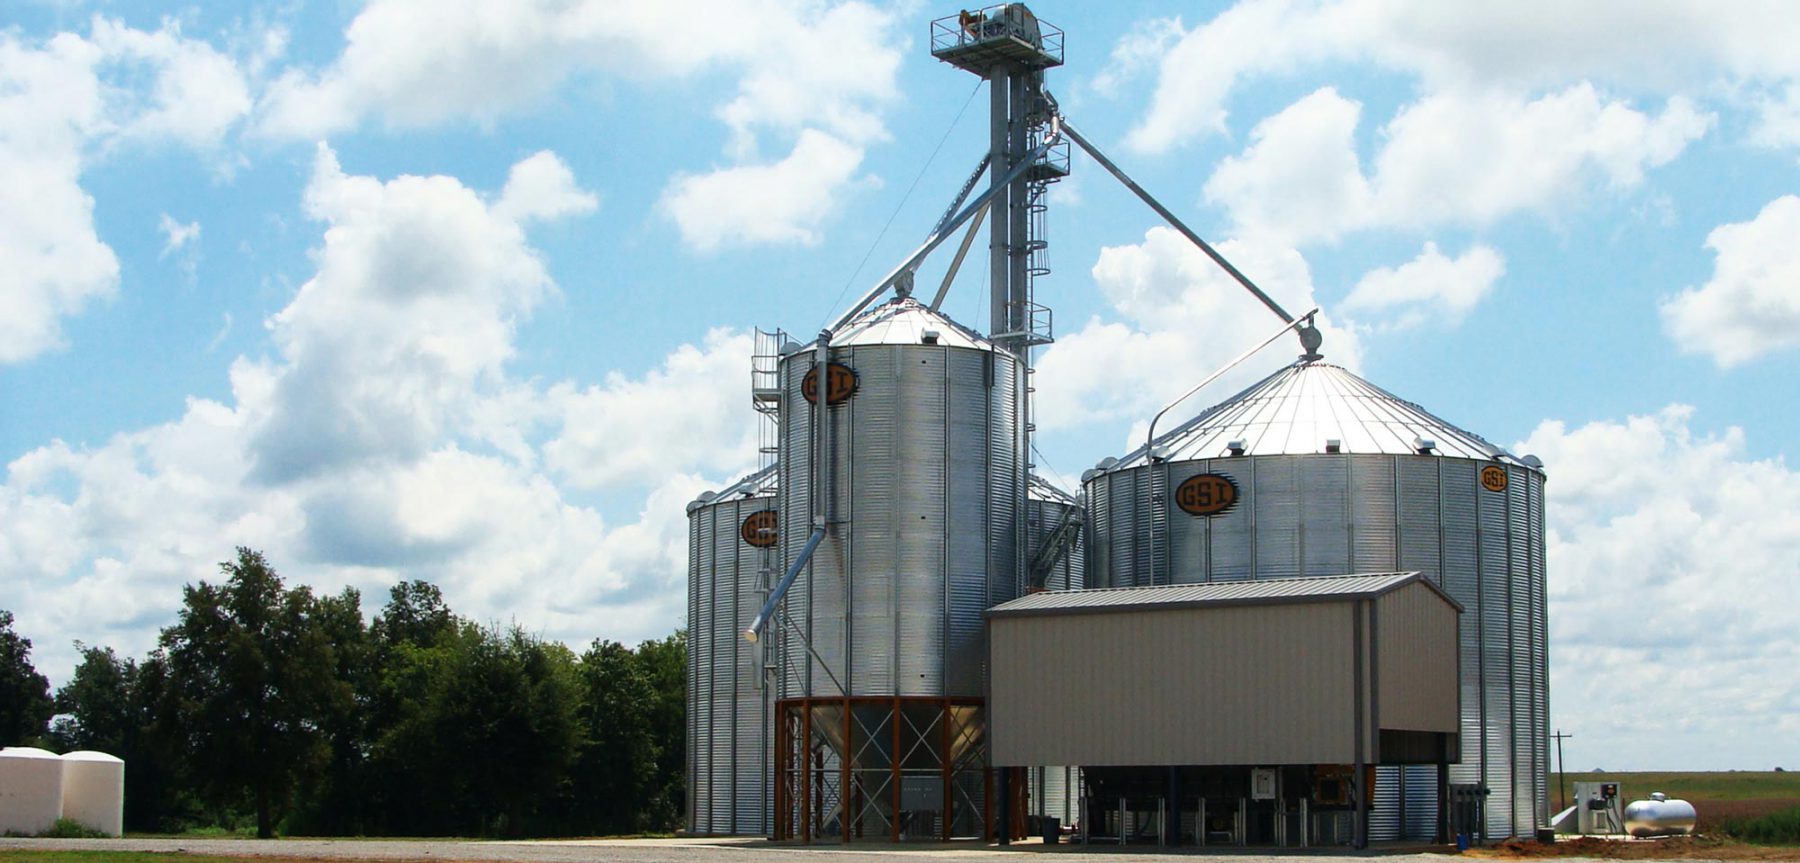 Triple J grain bin storage for East Mississippi